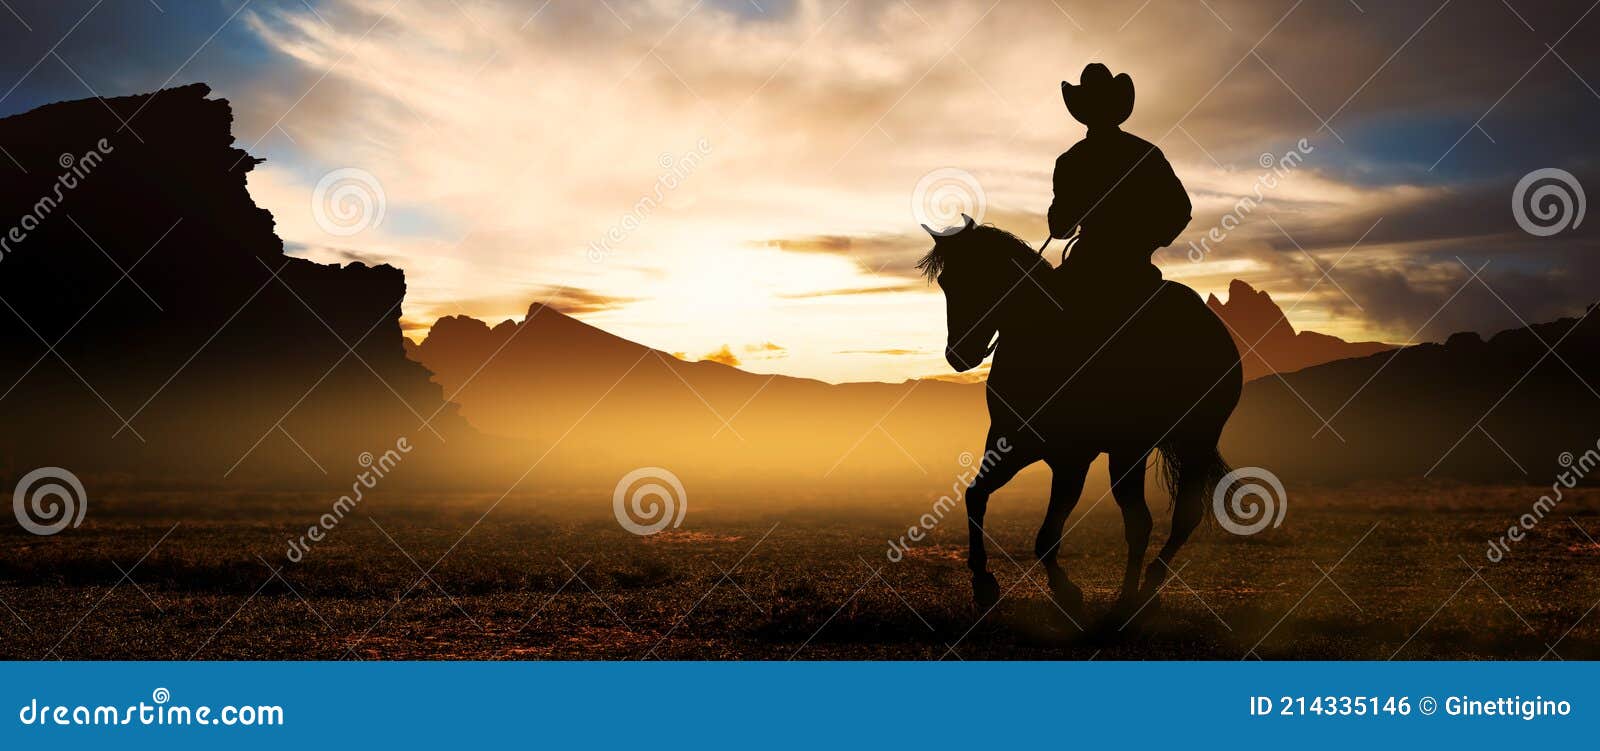 cowboys on horseback at sunset